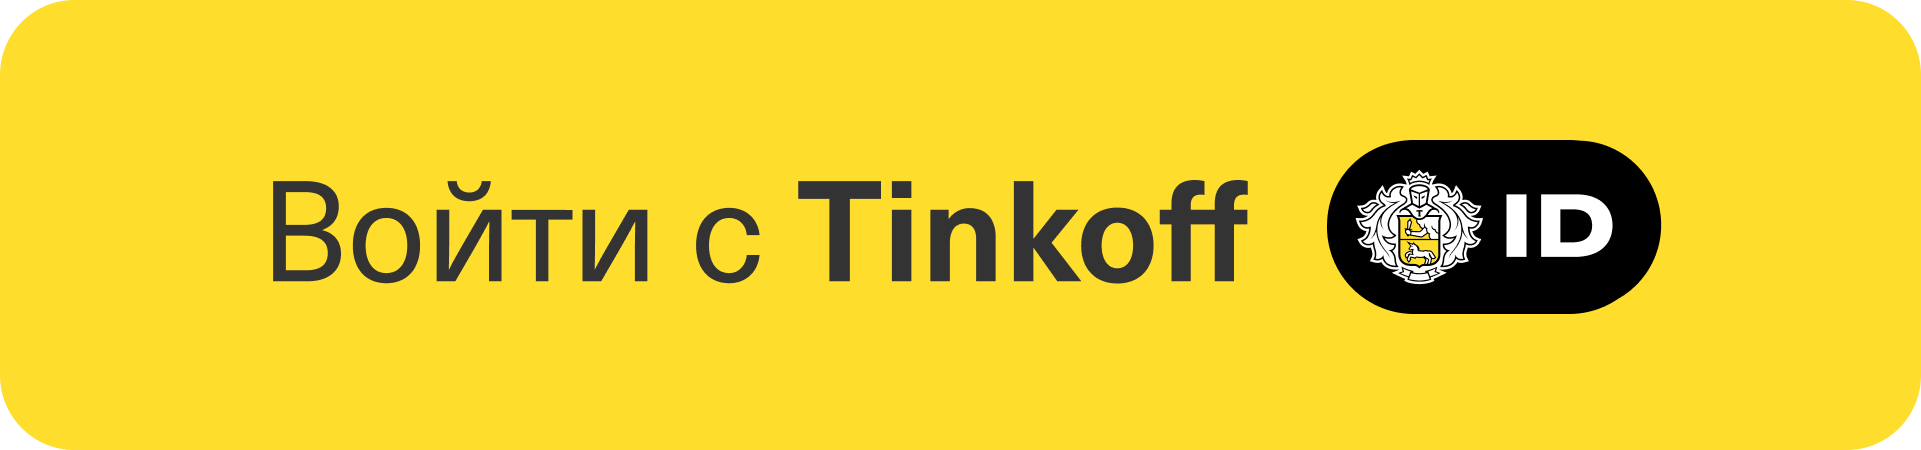 Tinkoff id